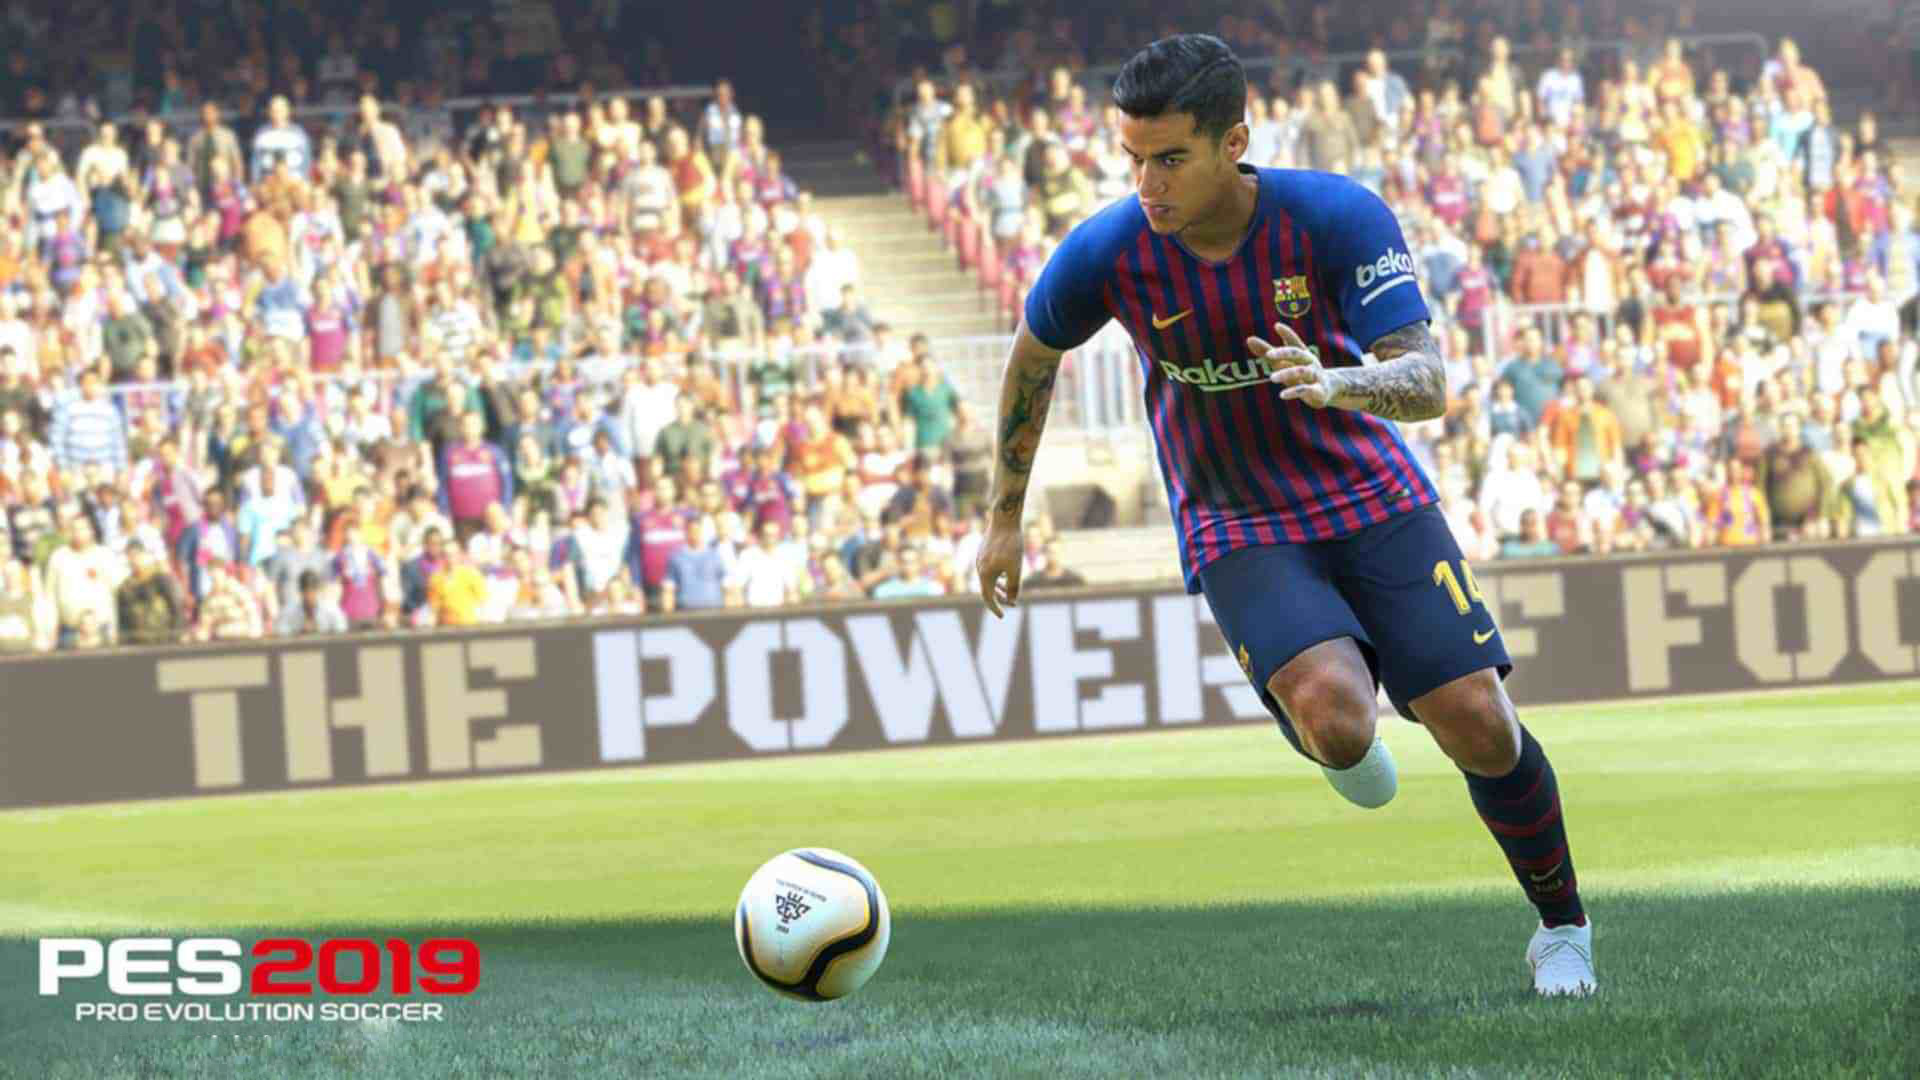 Pro Evolution Soccer 2019 1080p Wallpaper - Pro Evolution Soccer 2019 , HD Wallpaper & Backgrounds